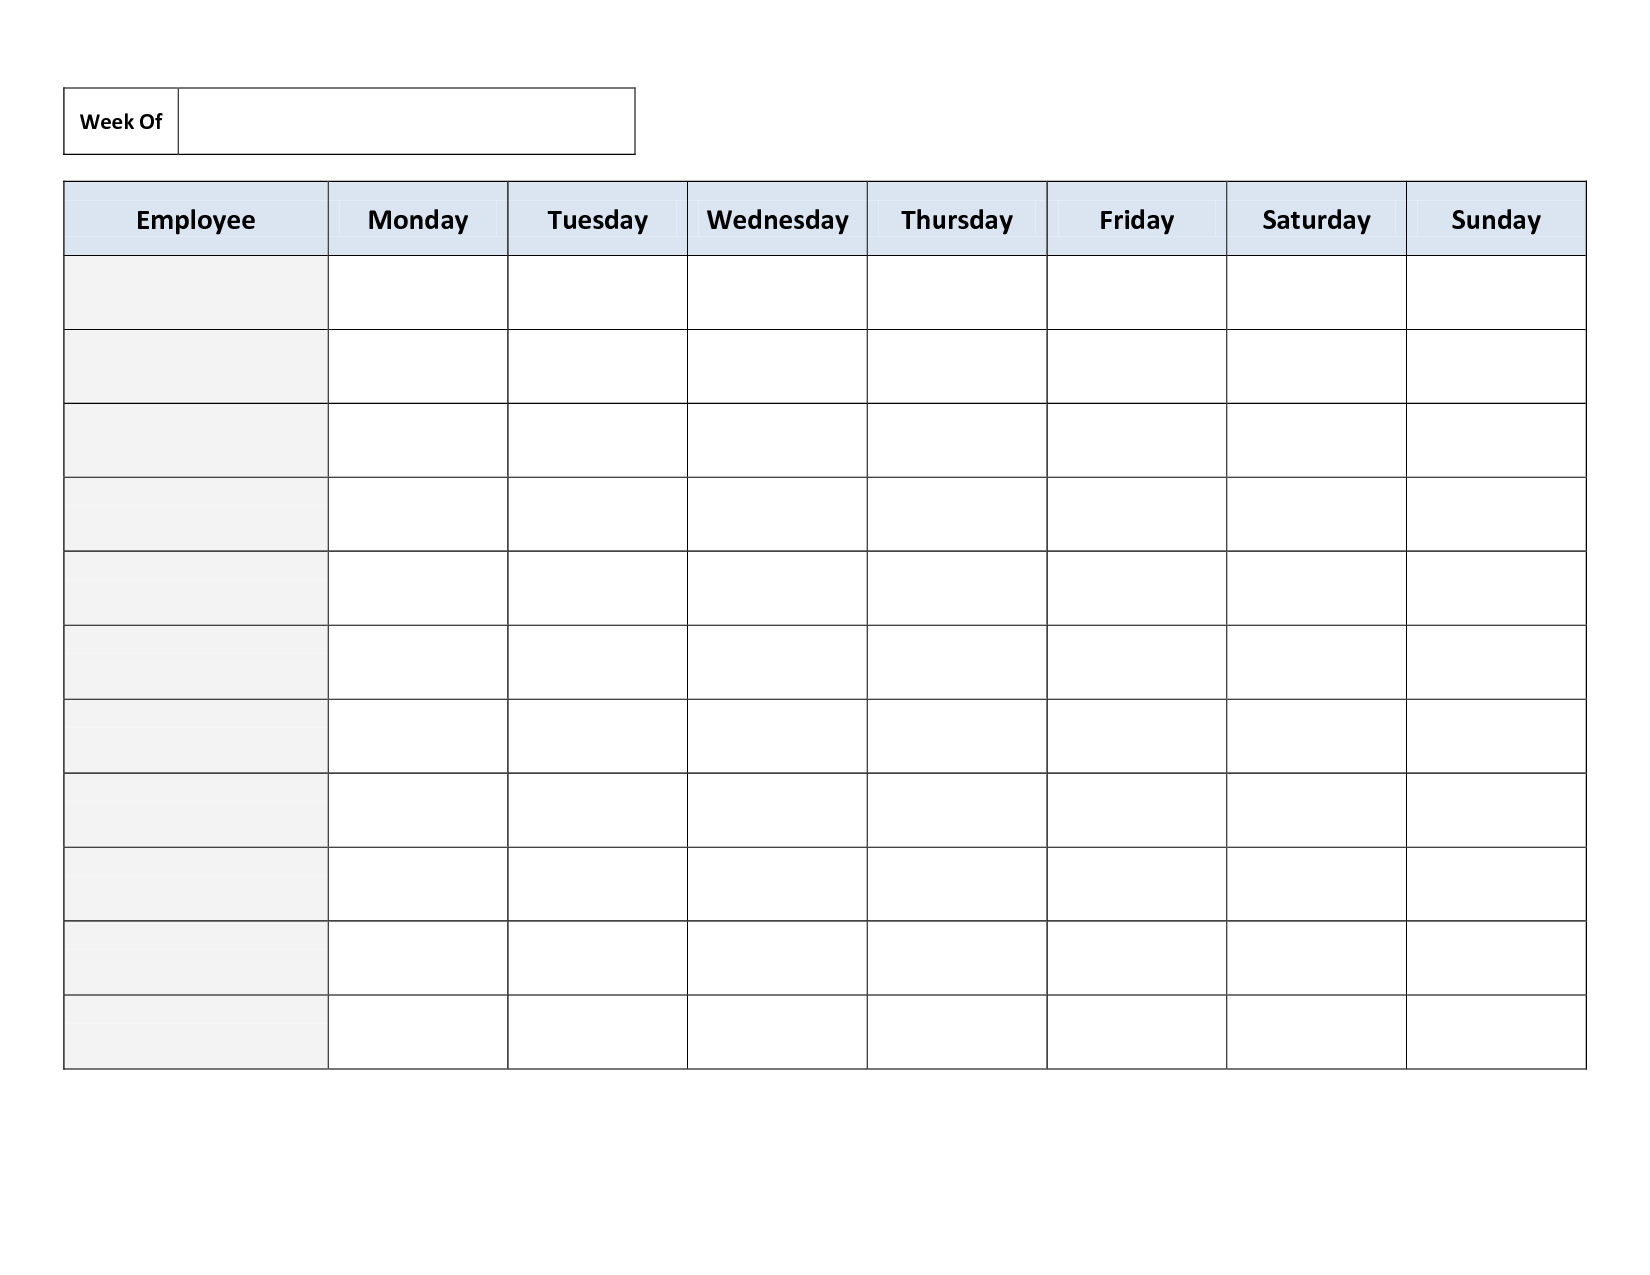 Weekly Employee Work Schedule Template. Free Blank Schedule.pdf - Free Printable Documents